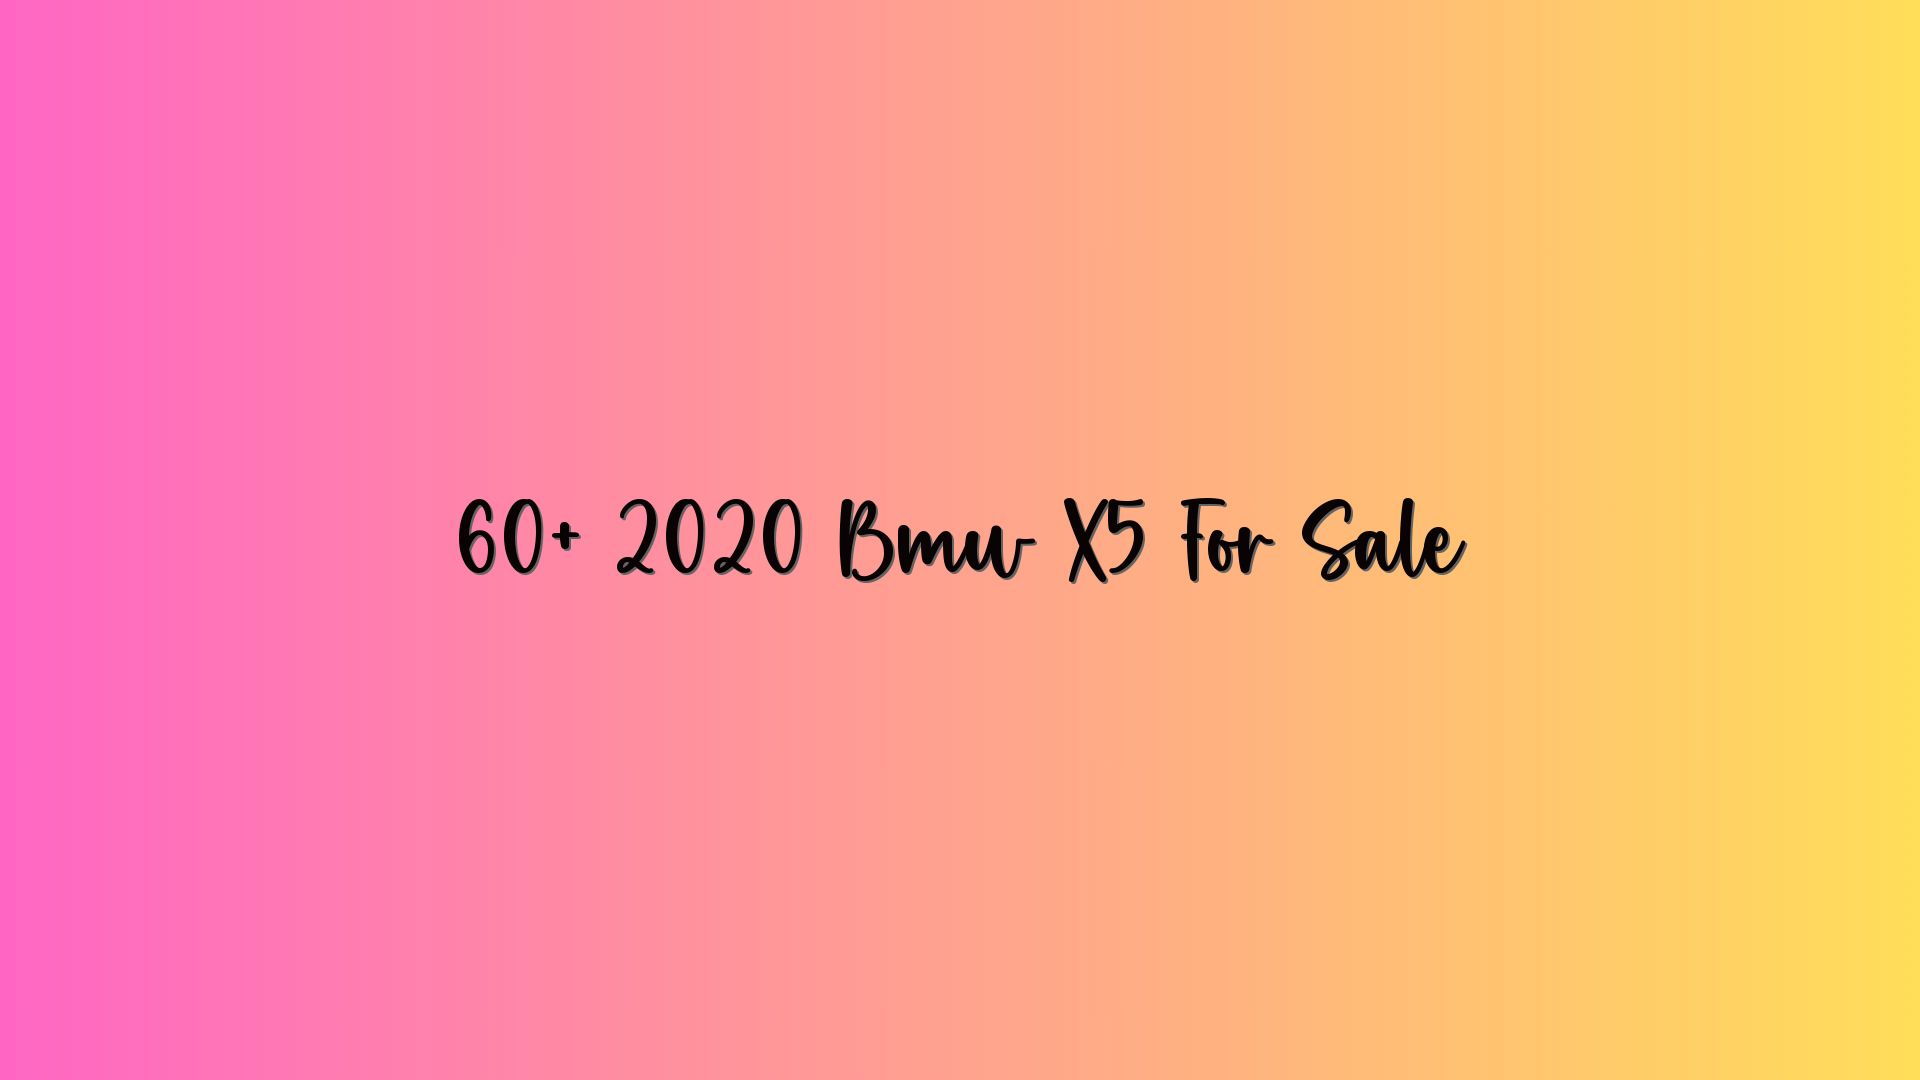 60+ 2020 Bmw X5 For Sale